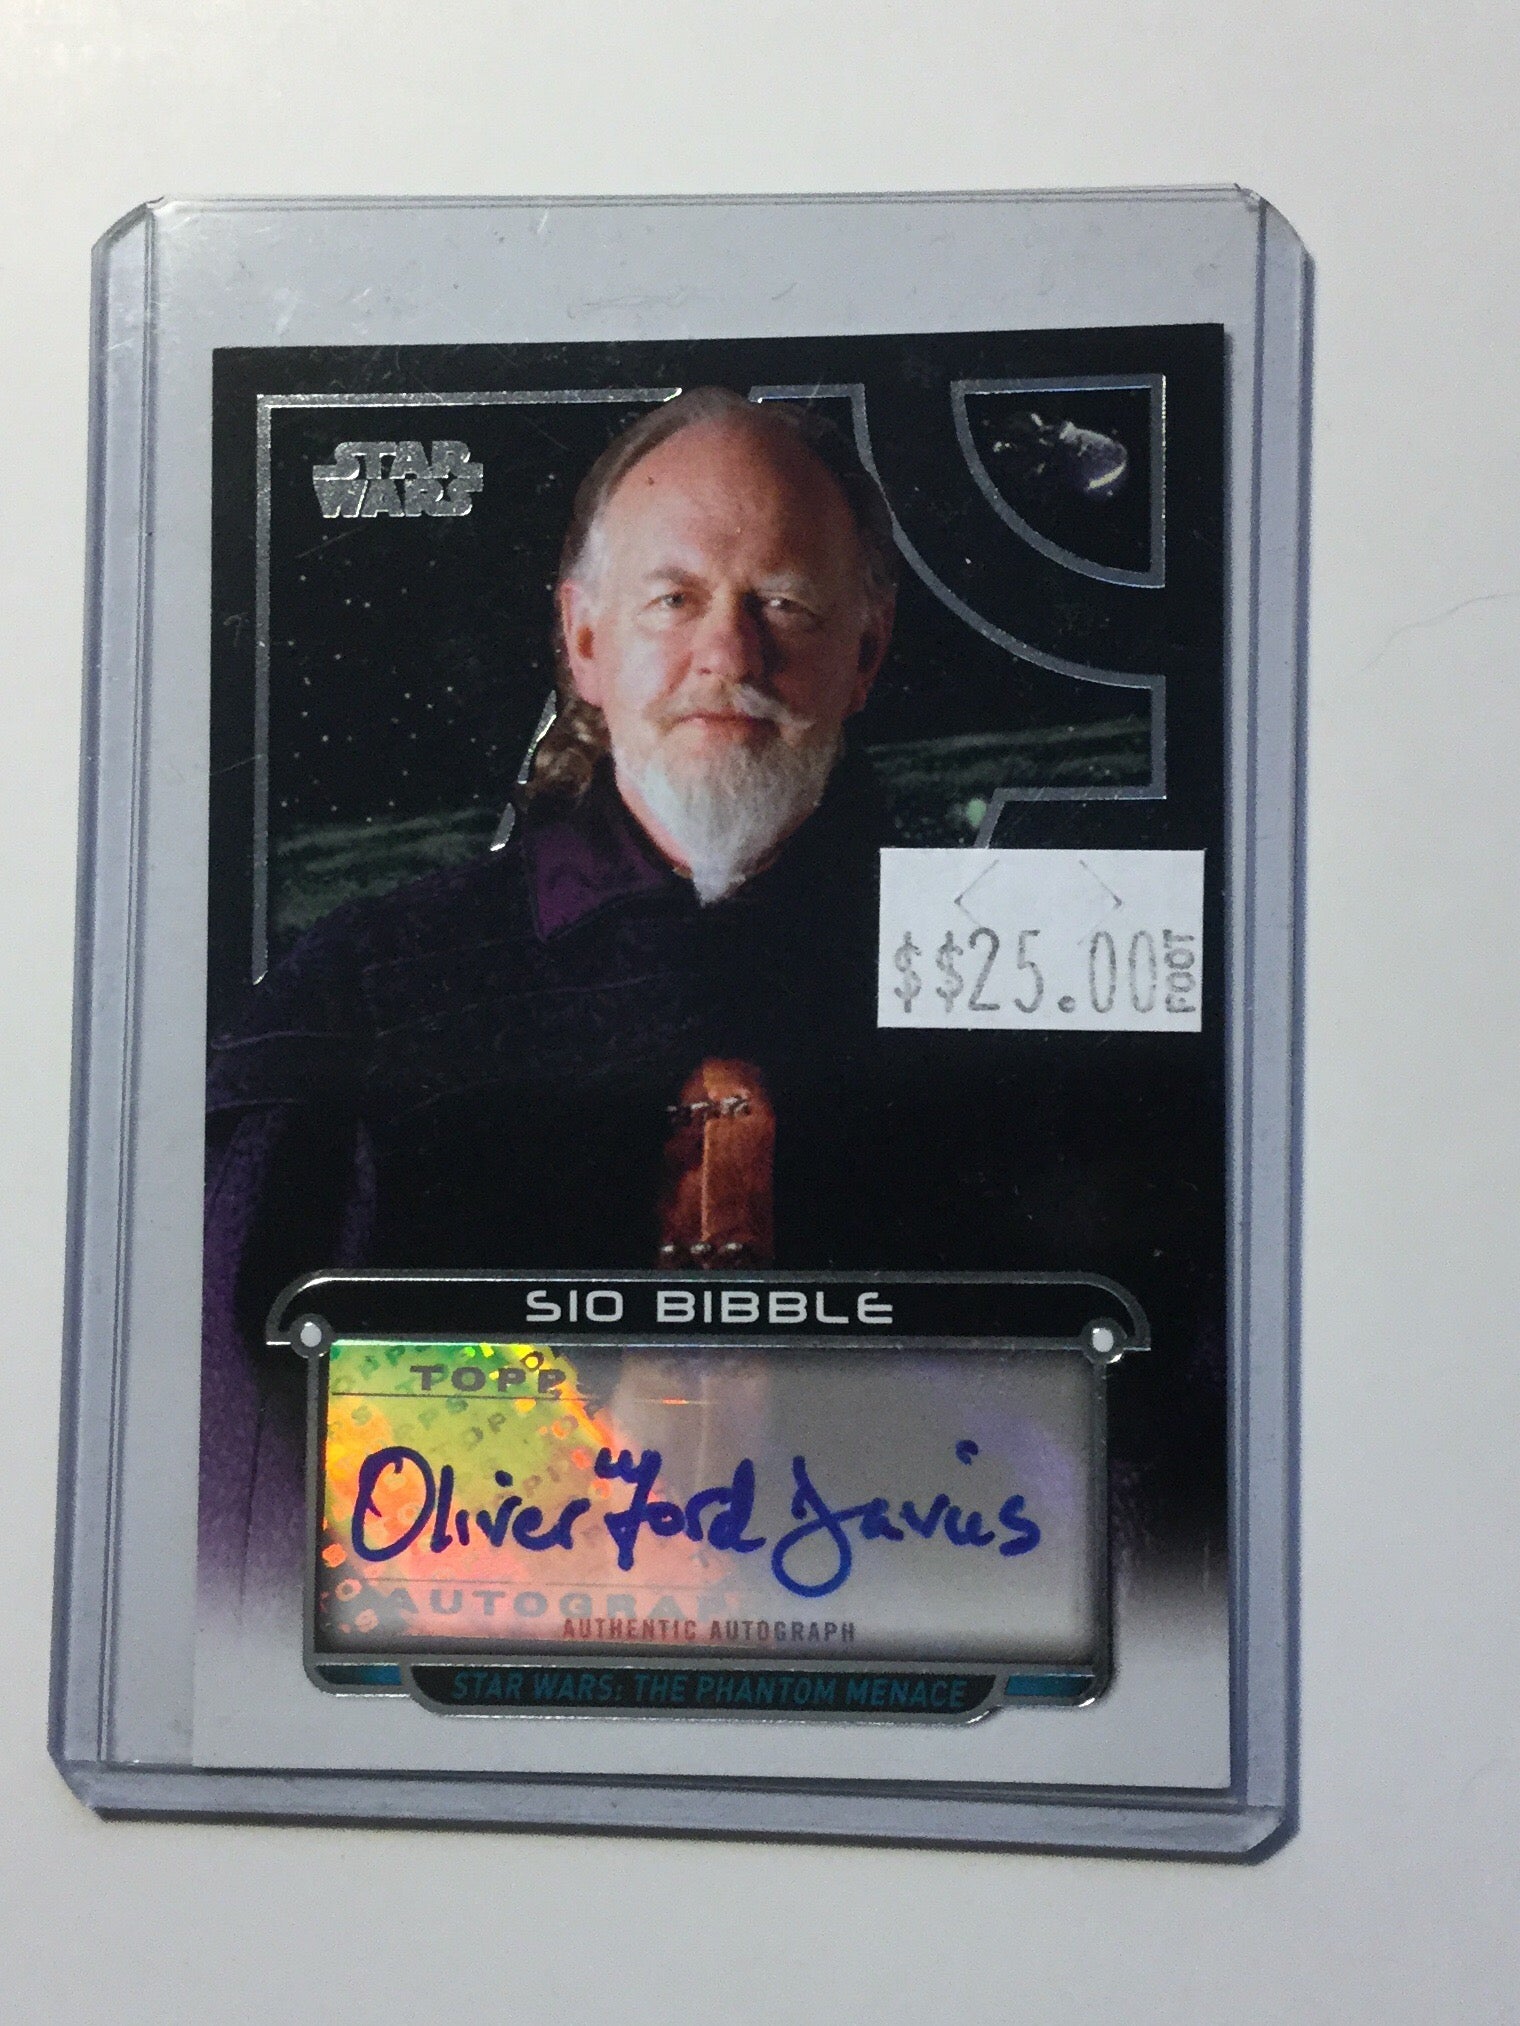 Last Jedi Oliver Ford Davies rare signed insert card